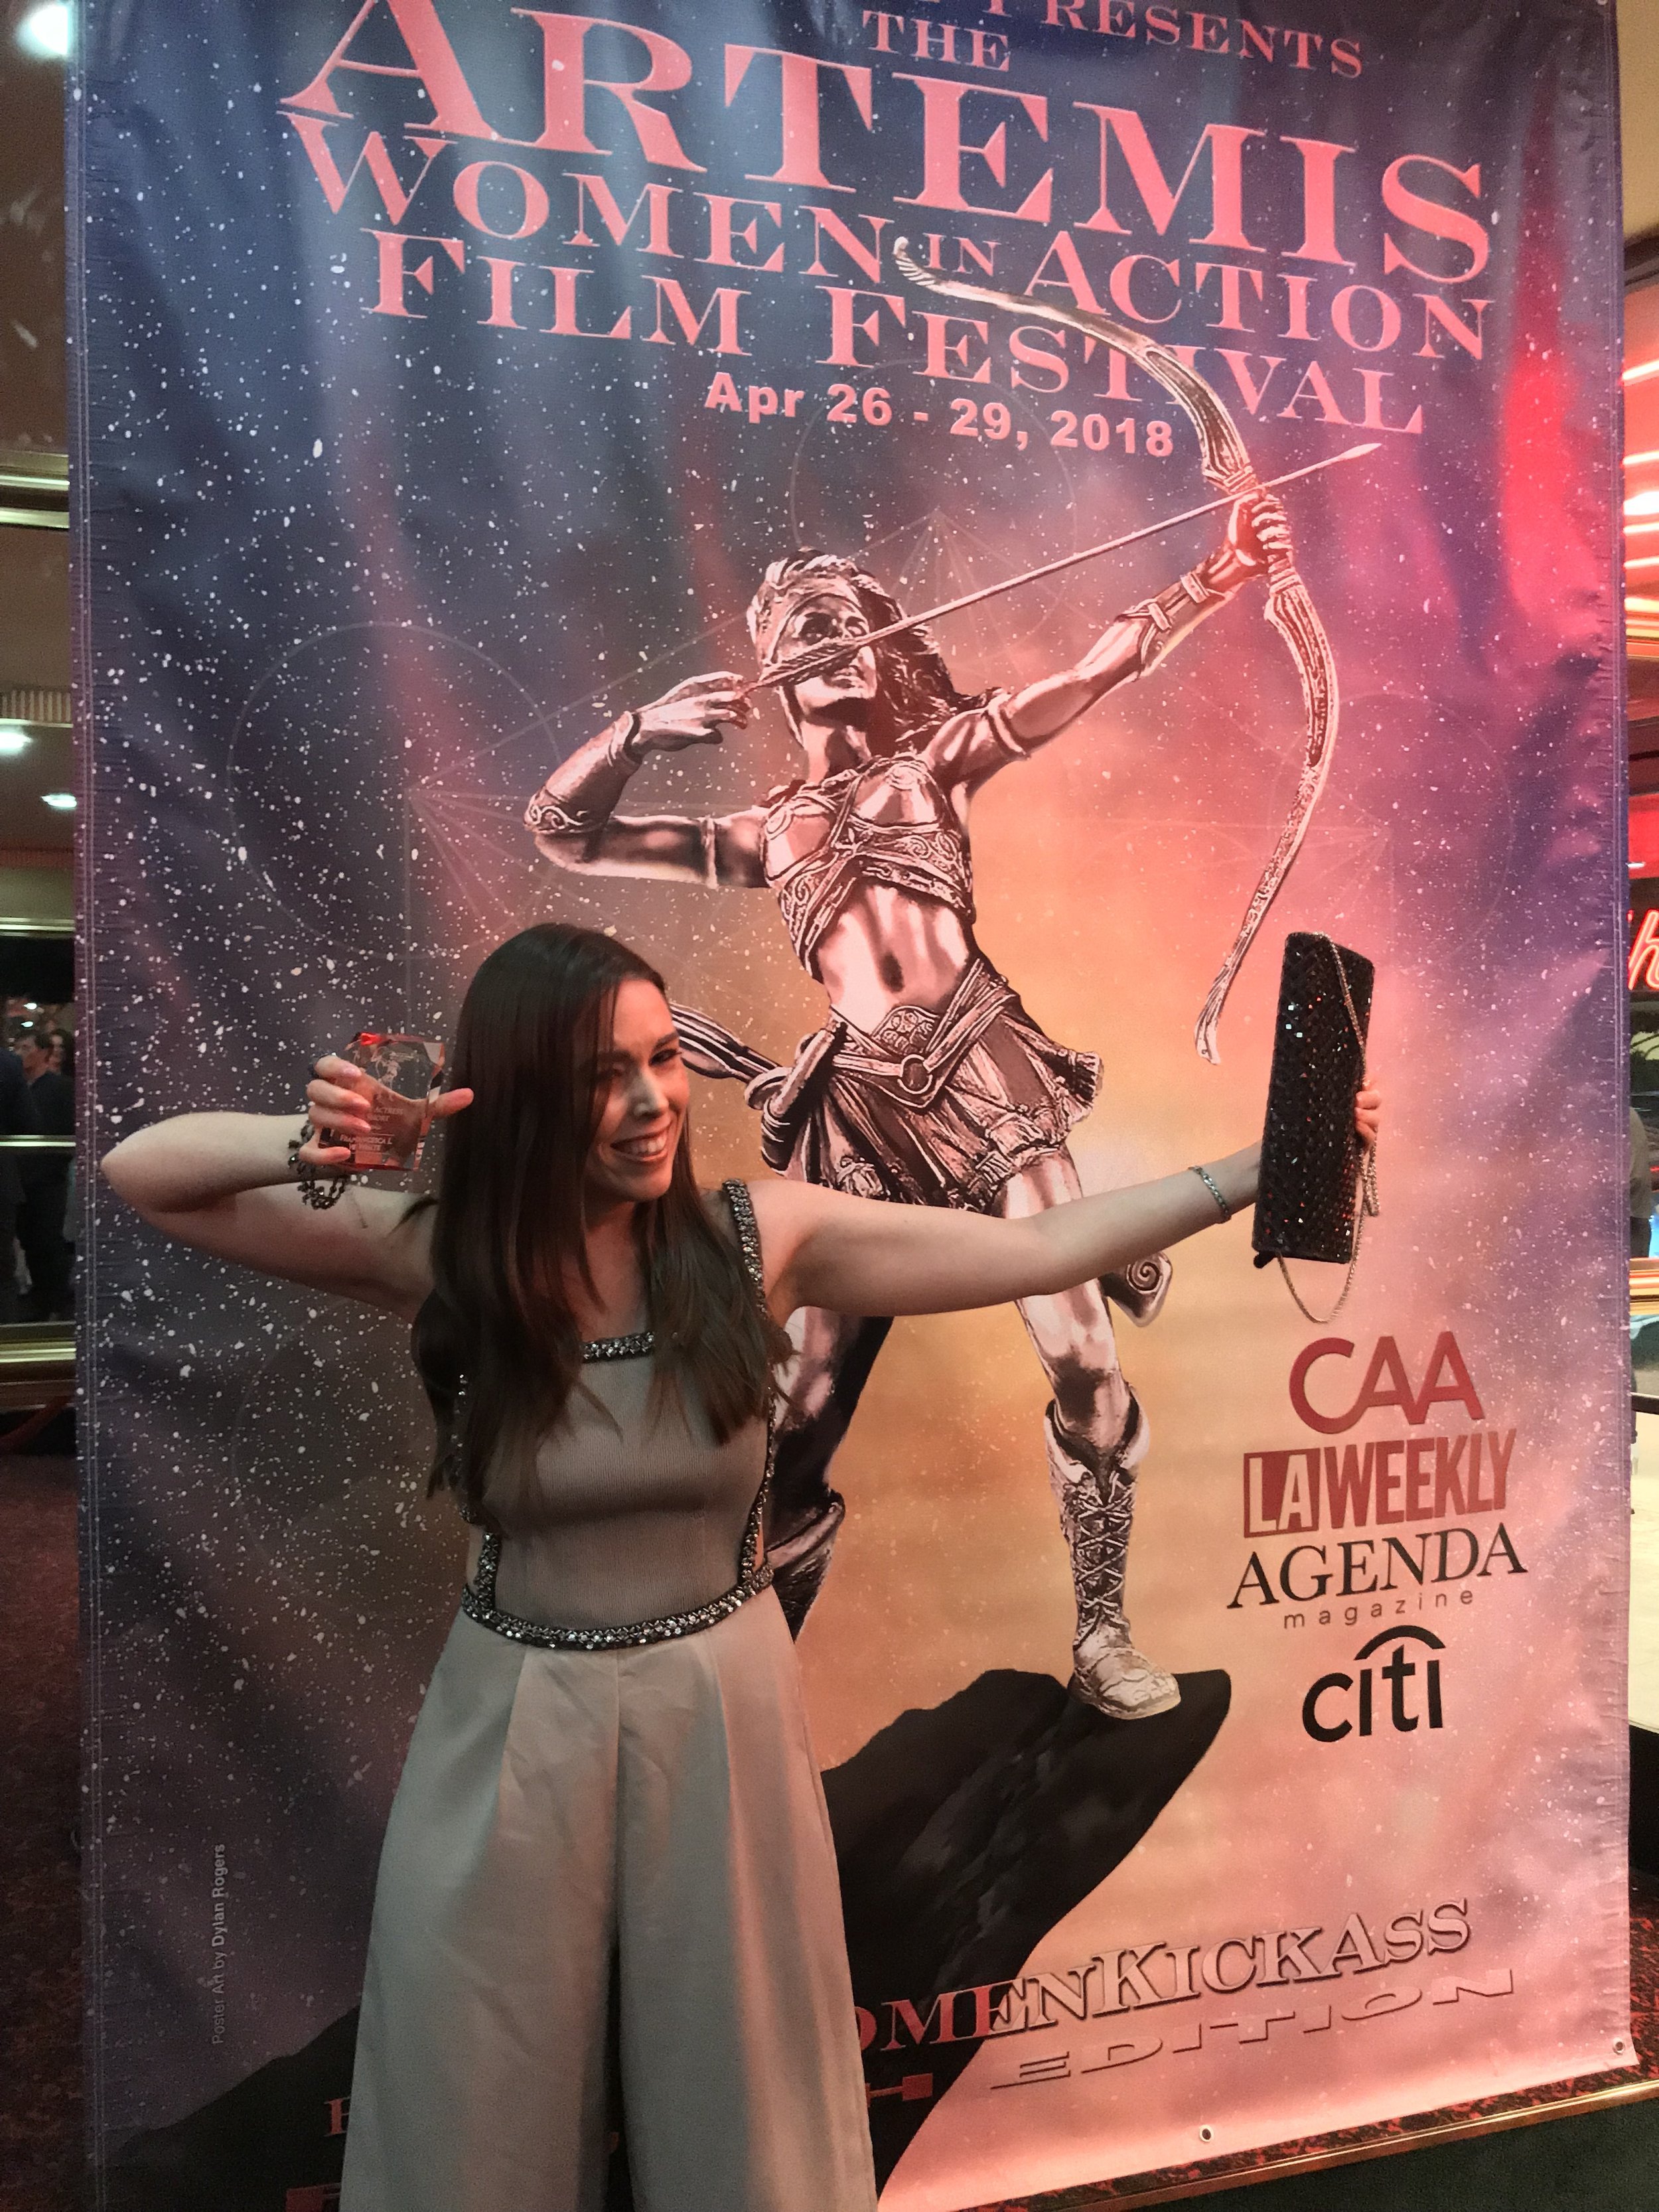 Artemis 'Women In Action' Film Festival, Beverly Hills April 2018